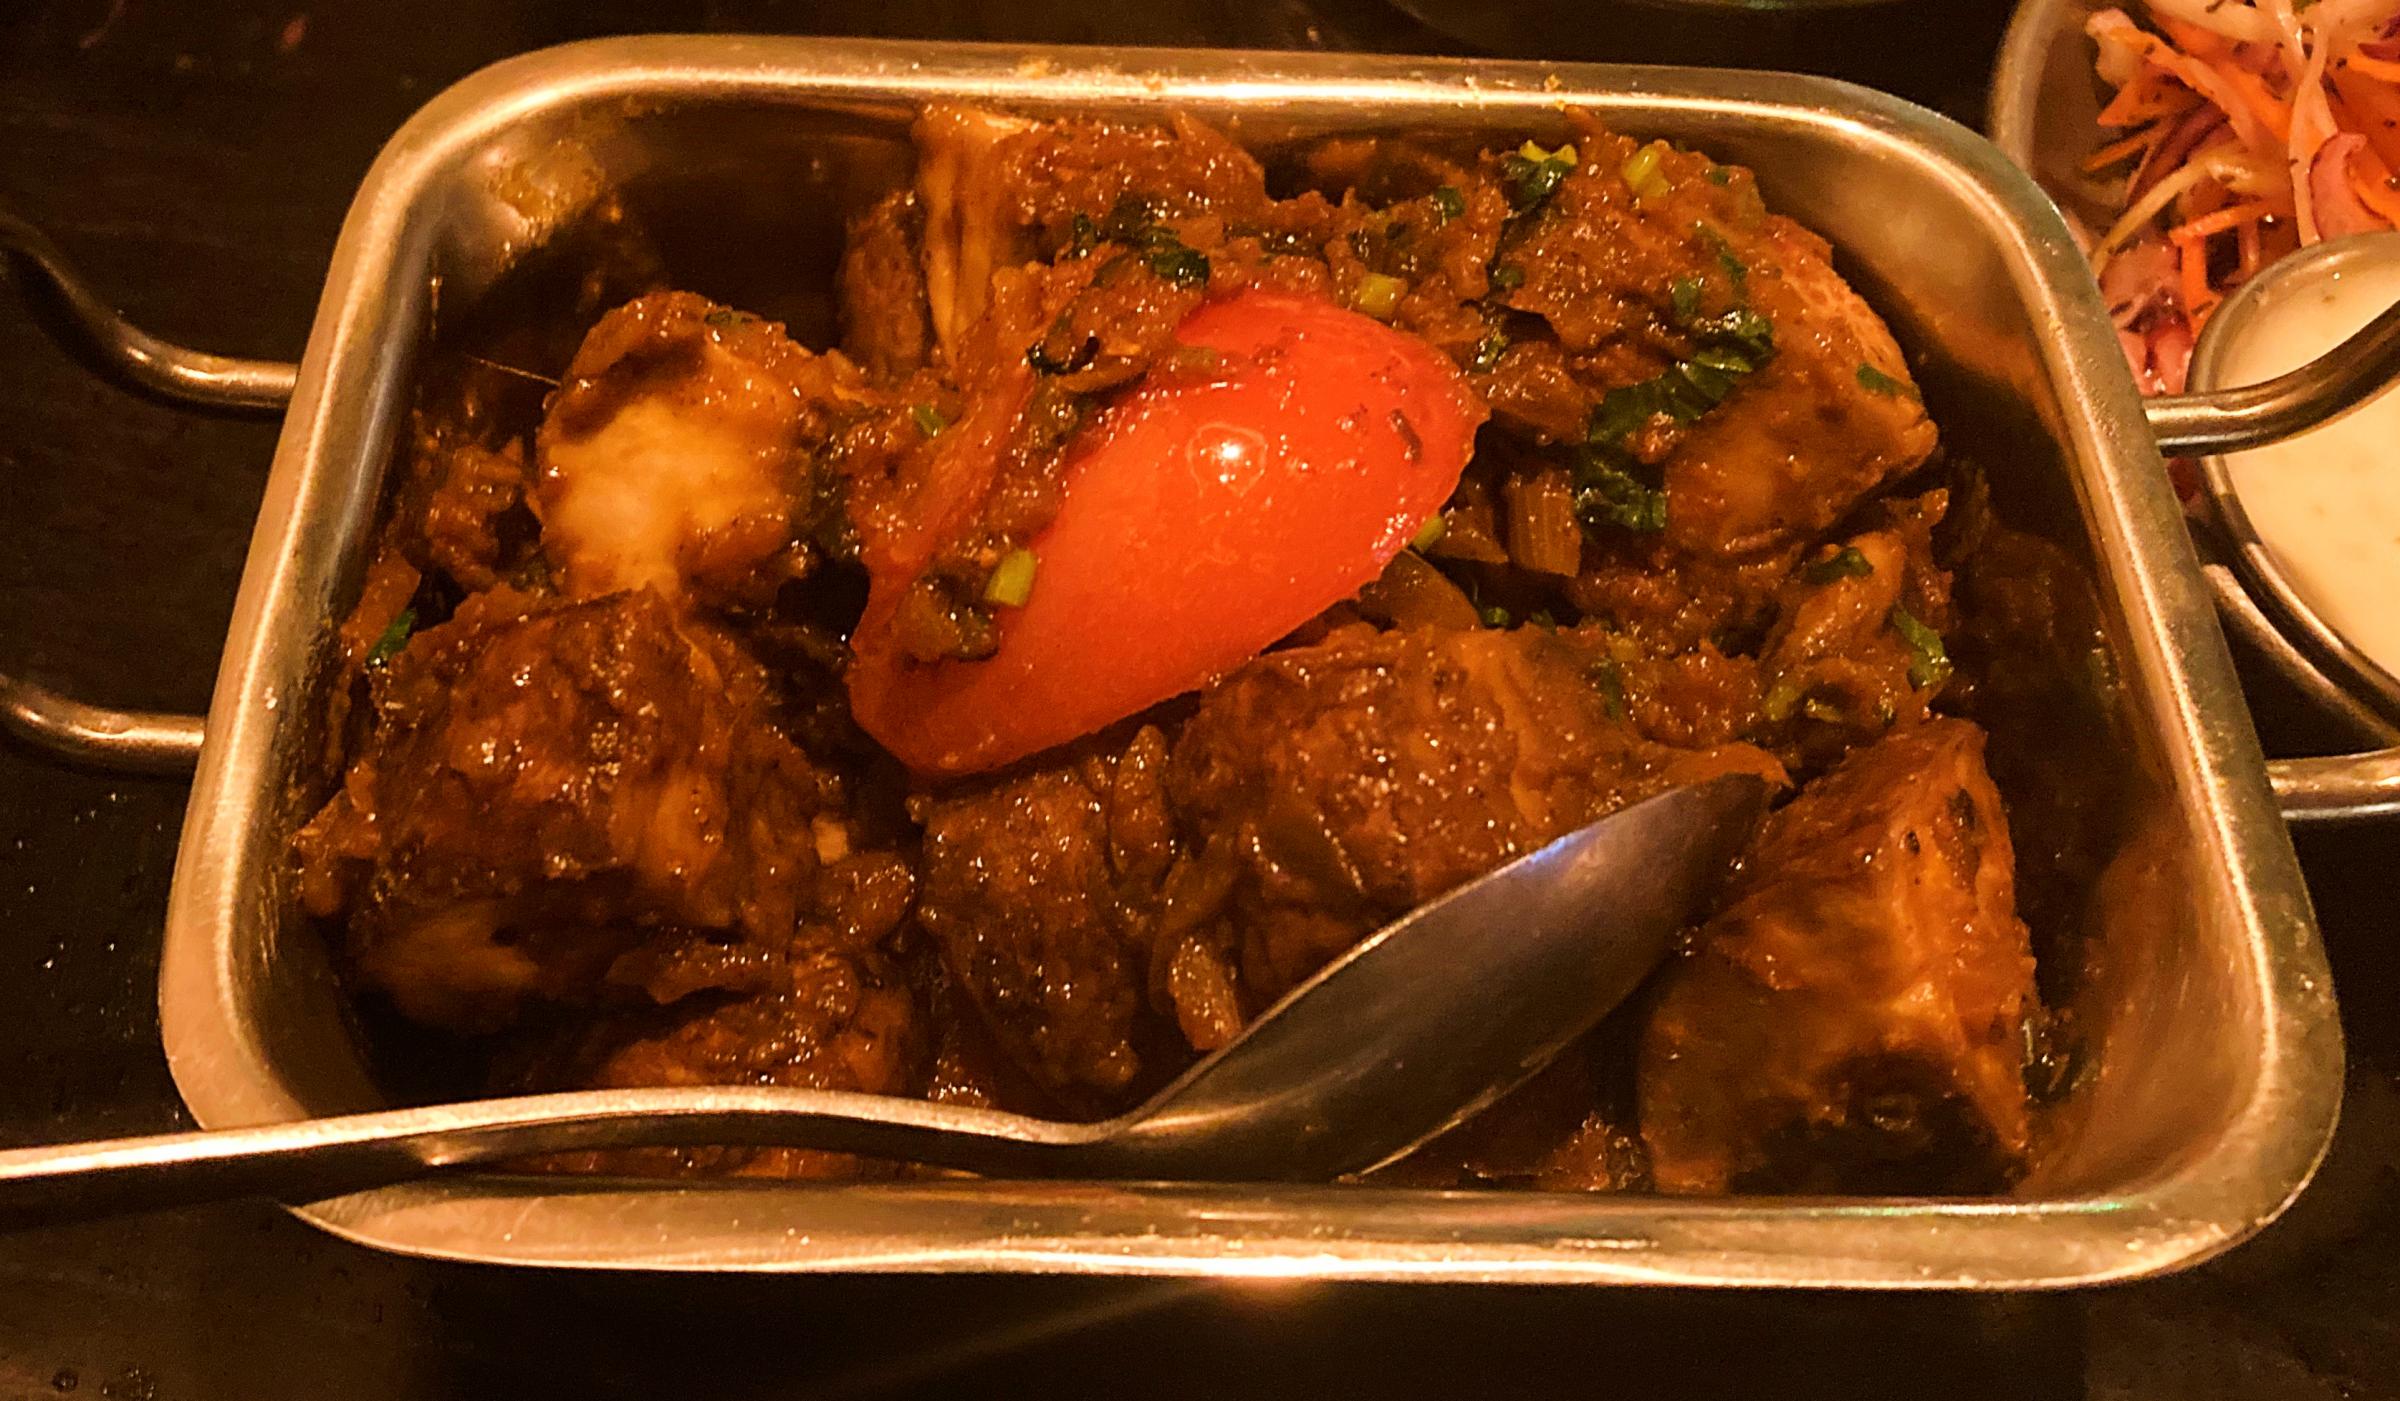 The mushroom bhaji - steaks of mushrooms in a bhuna sauce